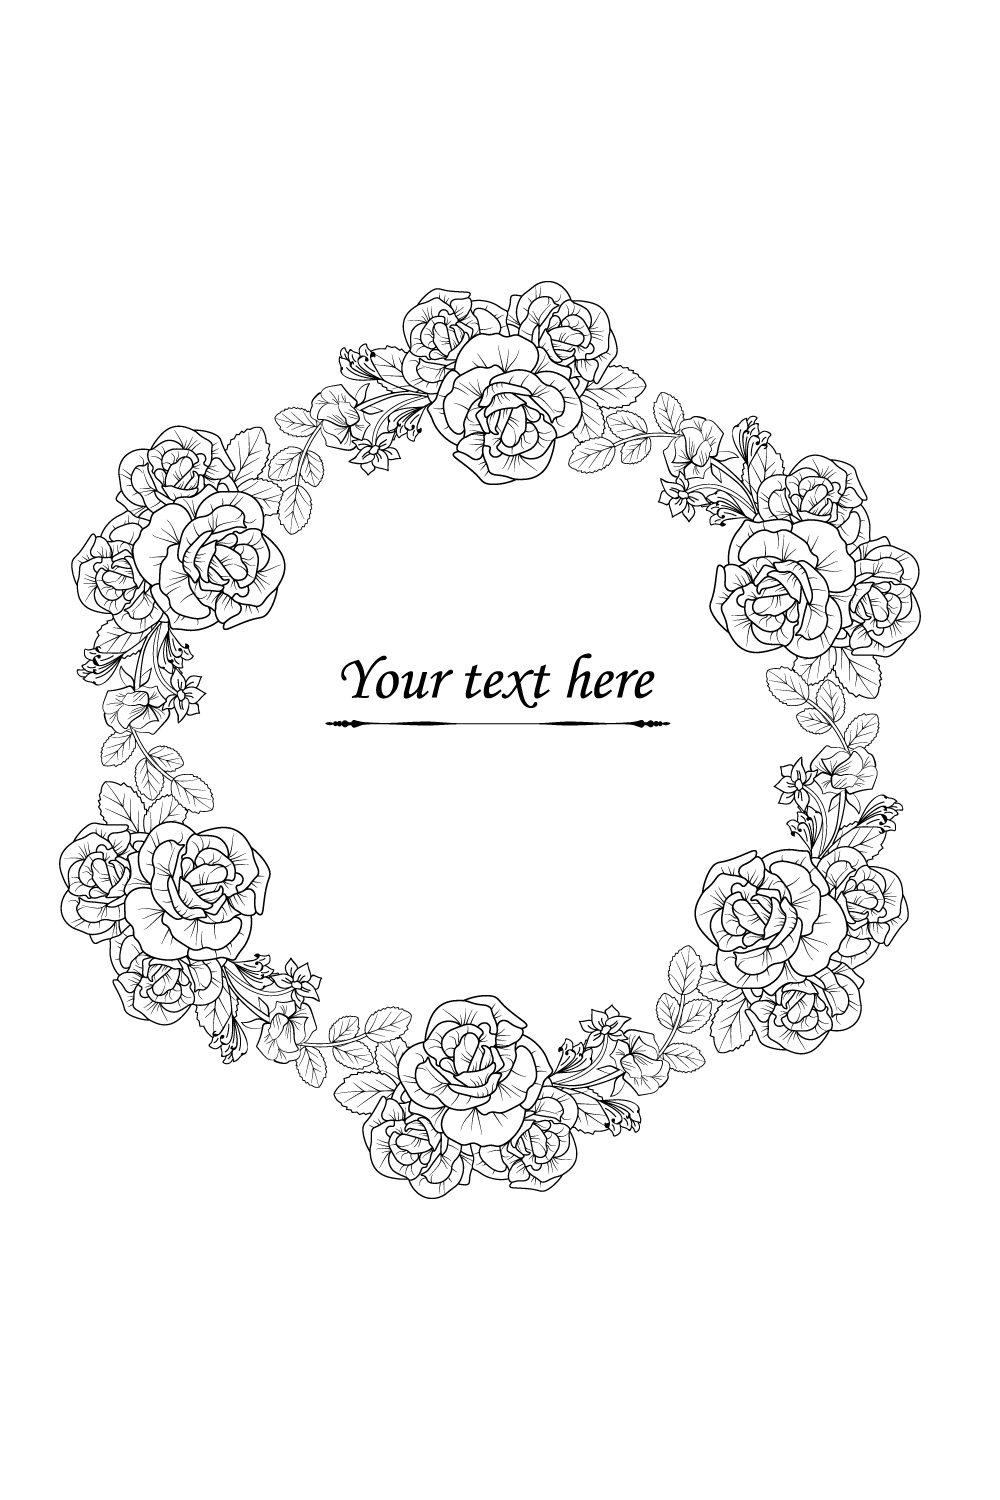 Rose flower border design rose border and frame design, rose border sve paper cut for weddings, pinterest preview image.